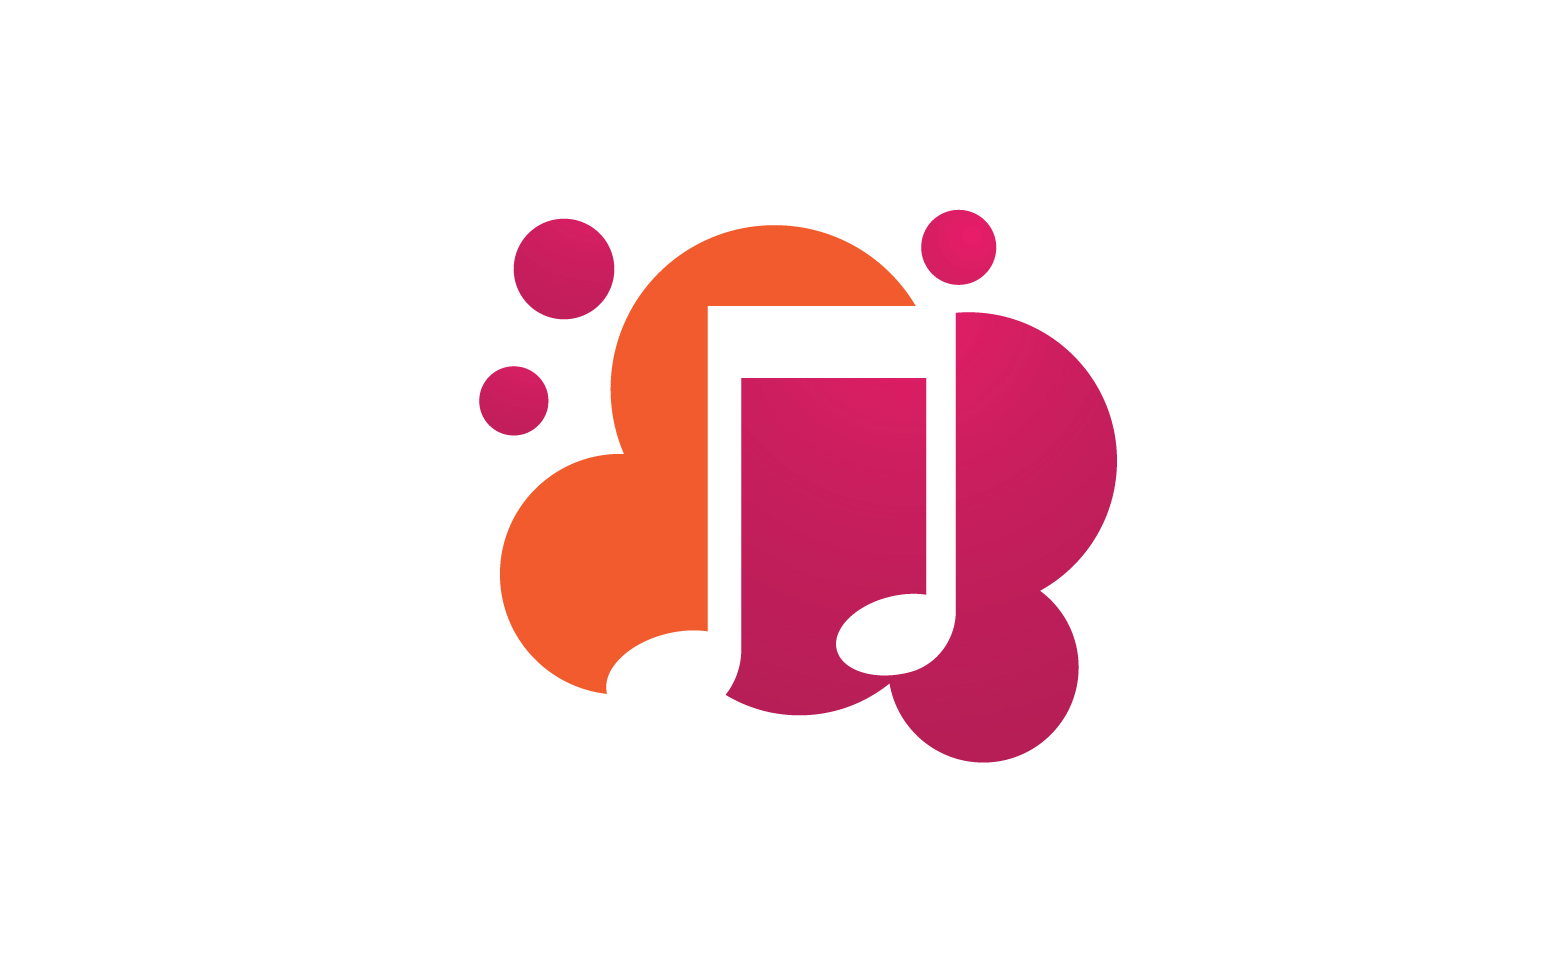 Music sound player app icon logo v.2